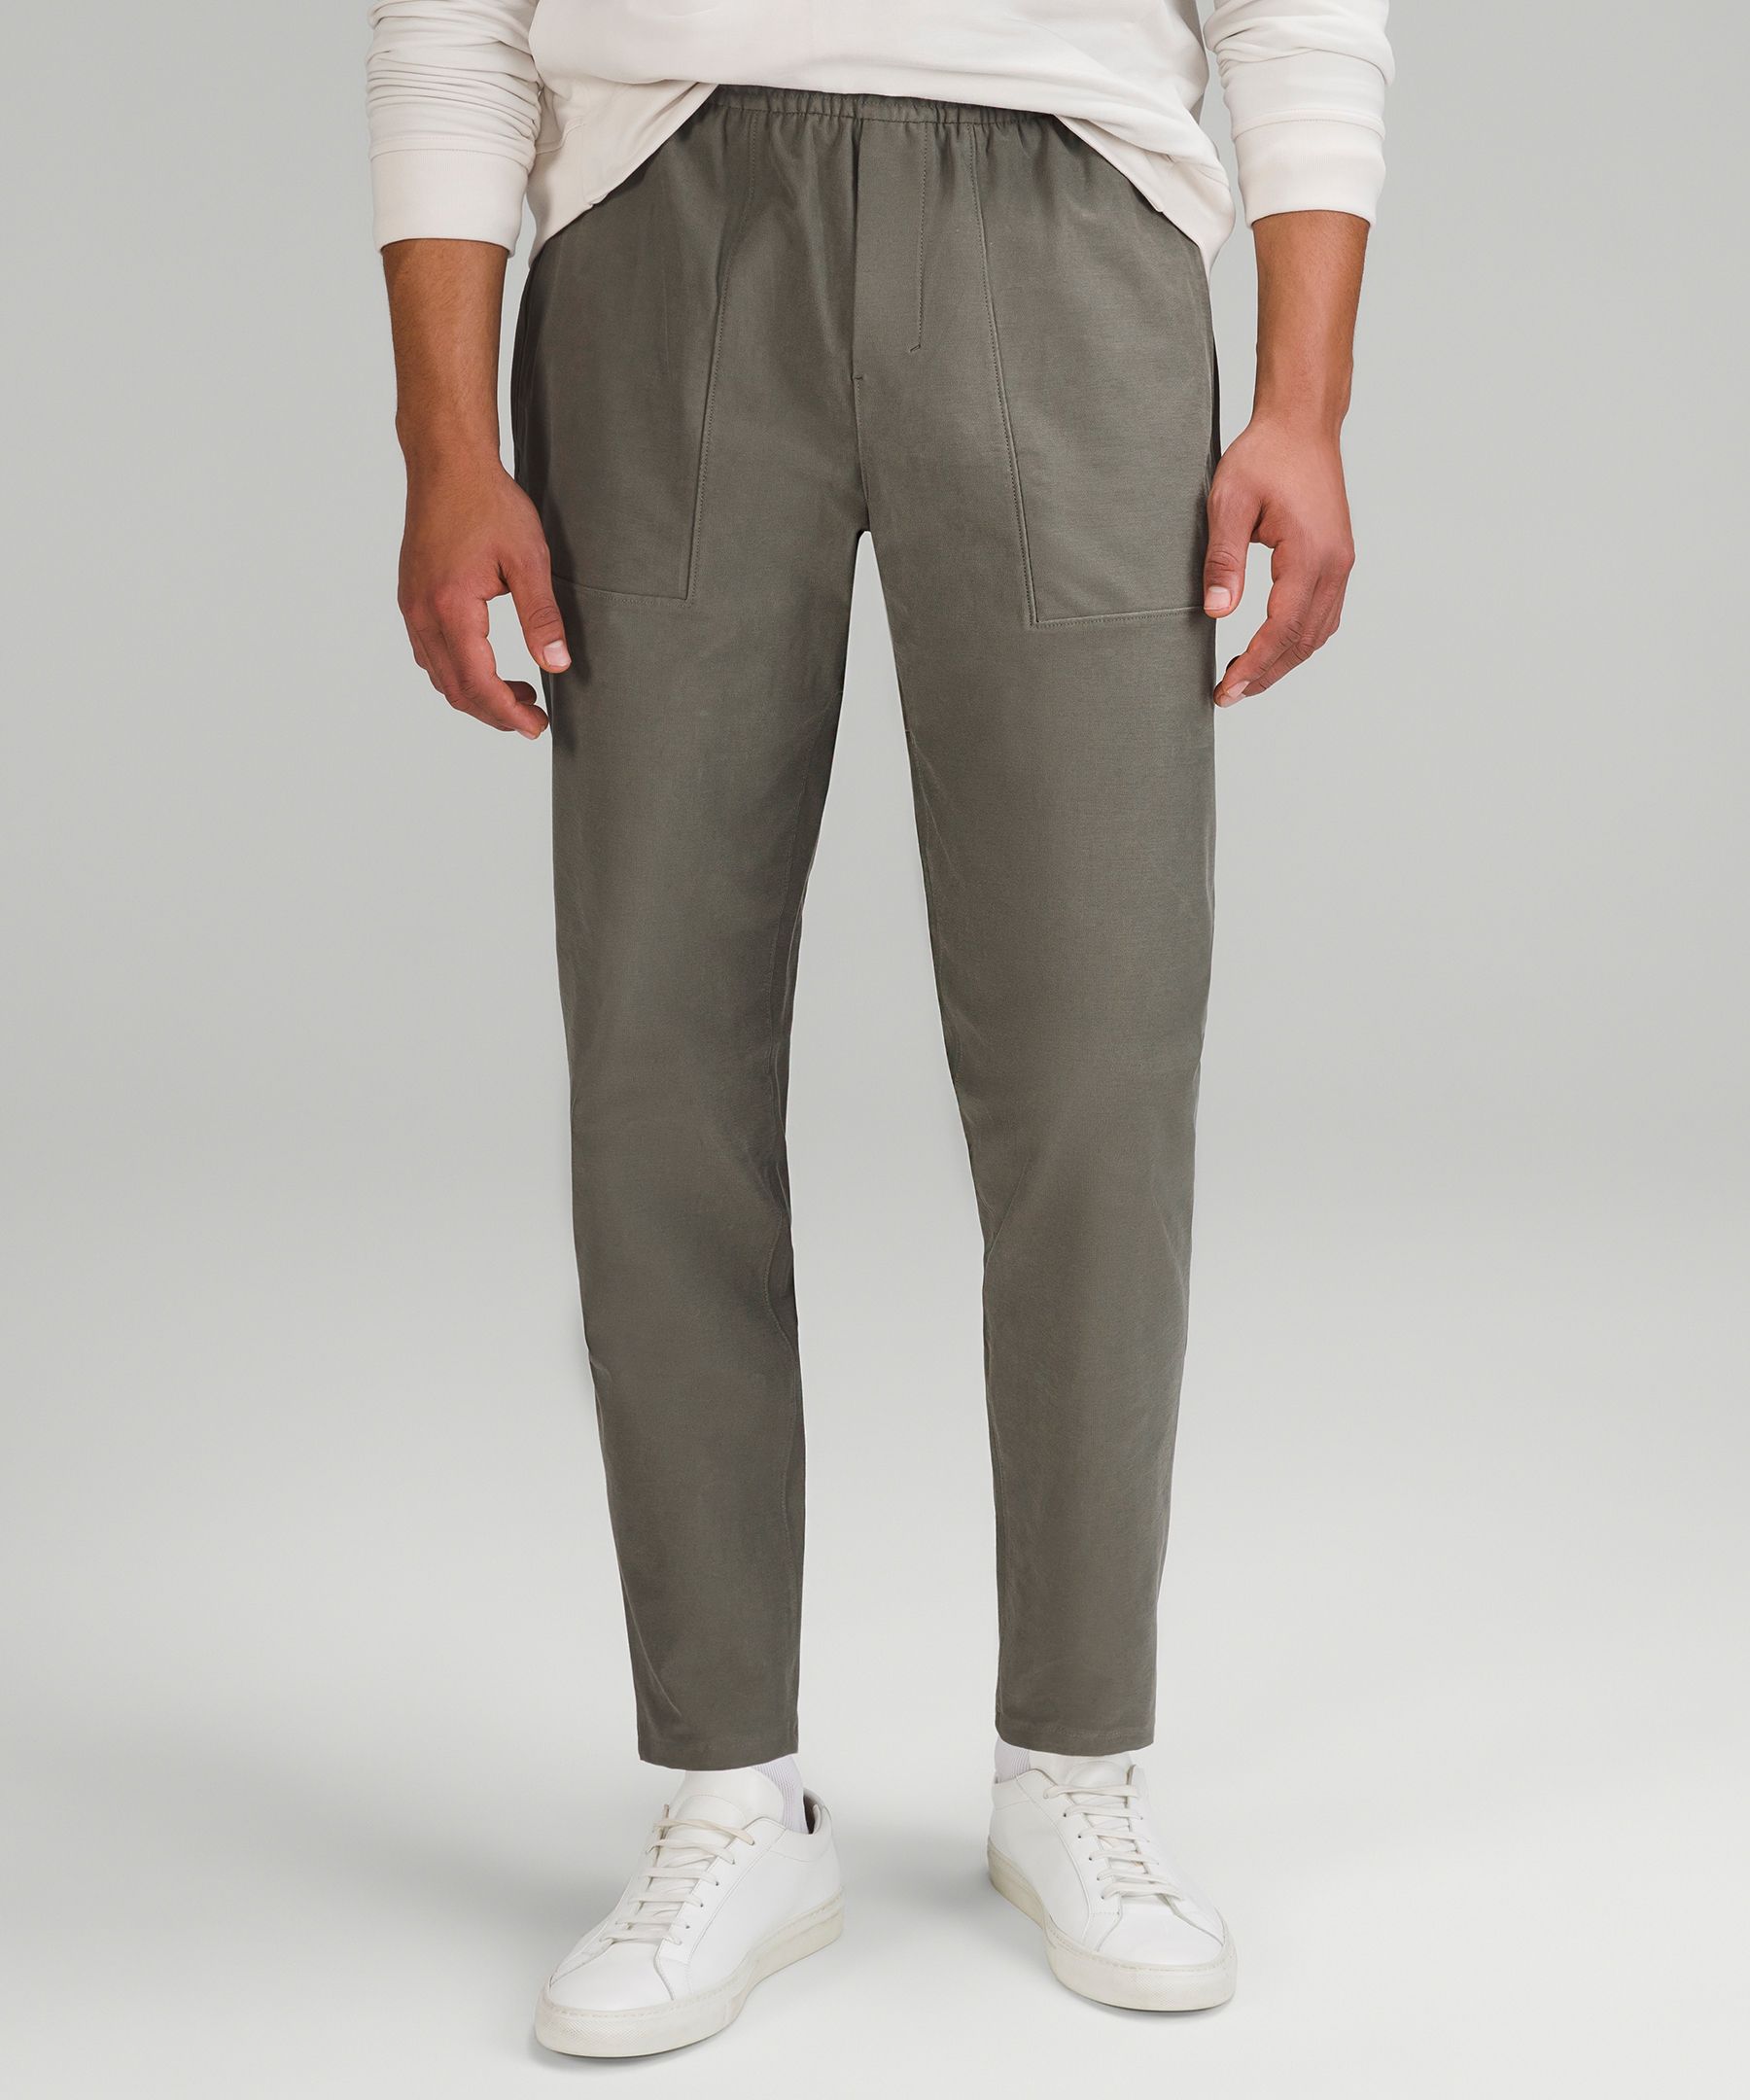 Lululemon Utilitech Pull-on Classic-fit Pants